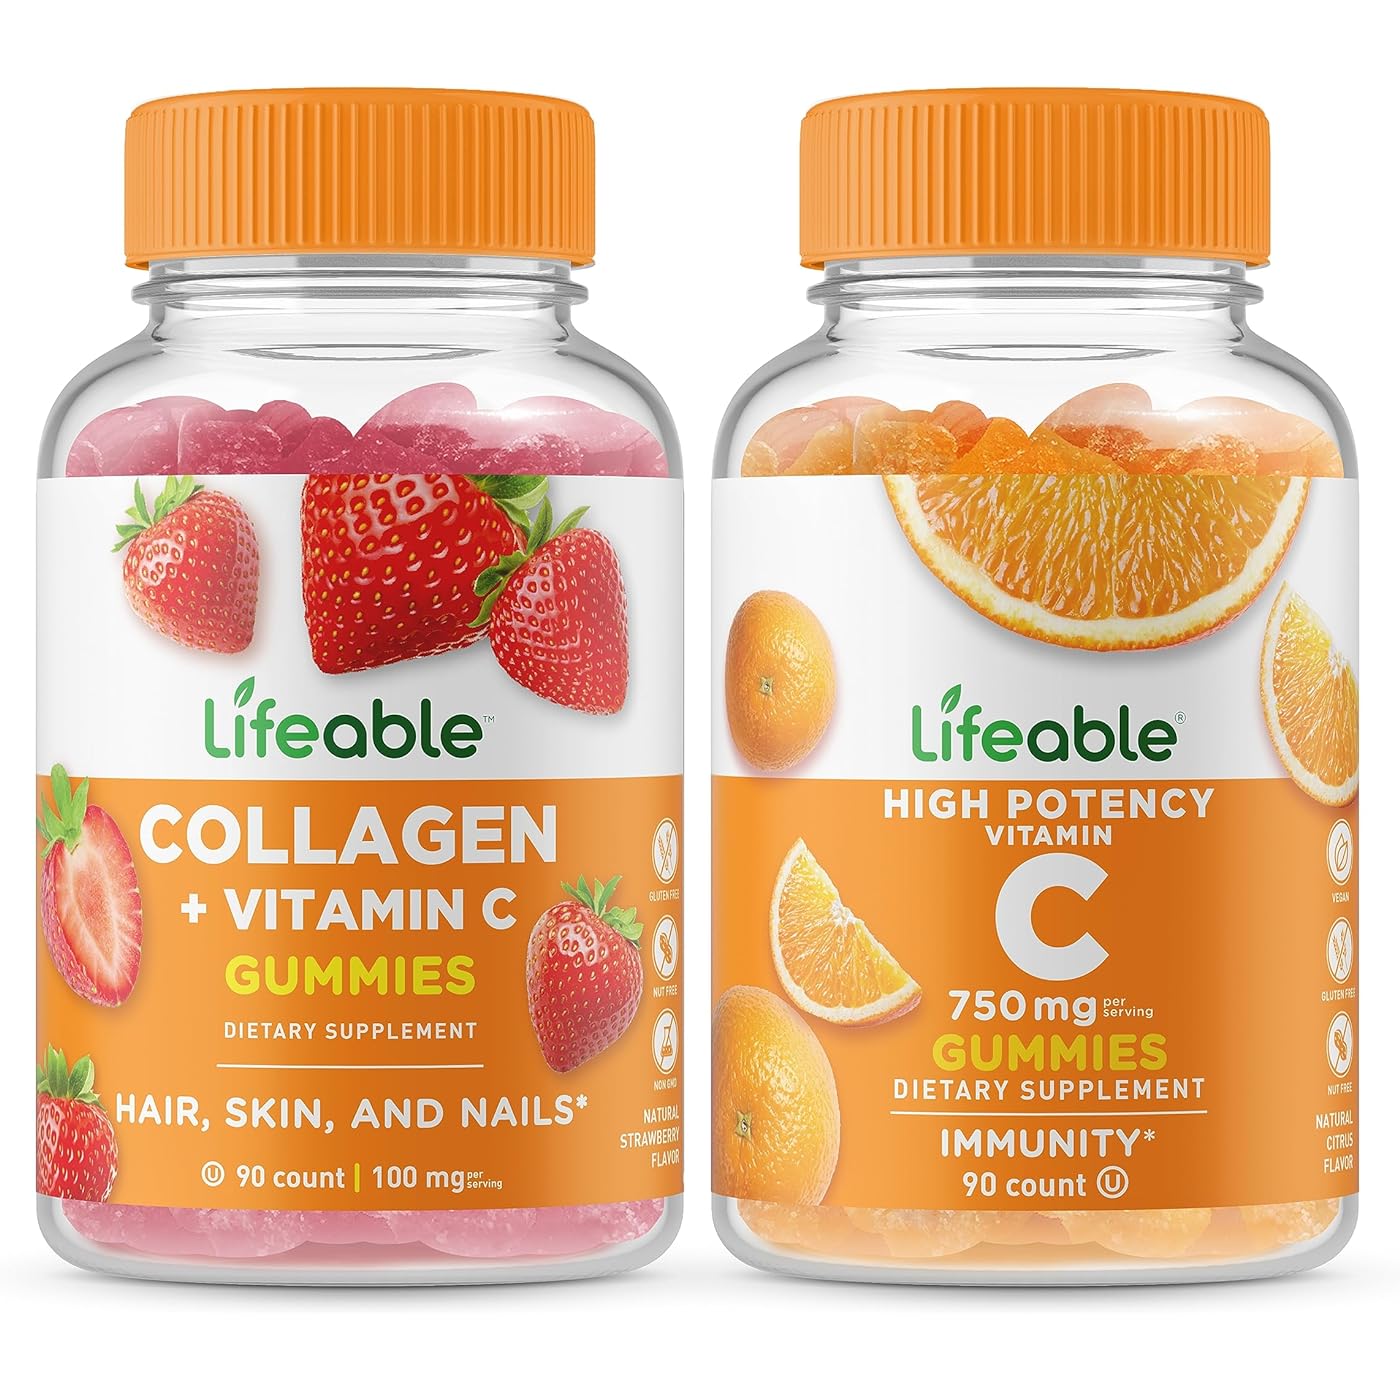 Набор витаминов Lifeable Collagen + Vitamin C & Vitamin C 750 mg, 2 предмета, 90 таблеток